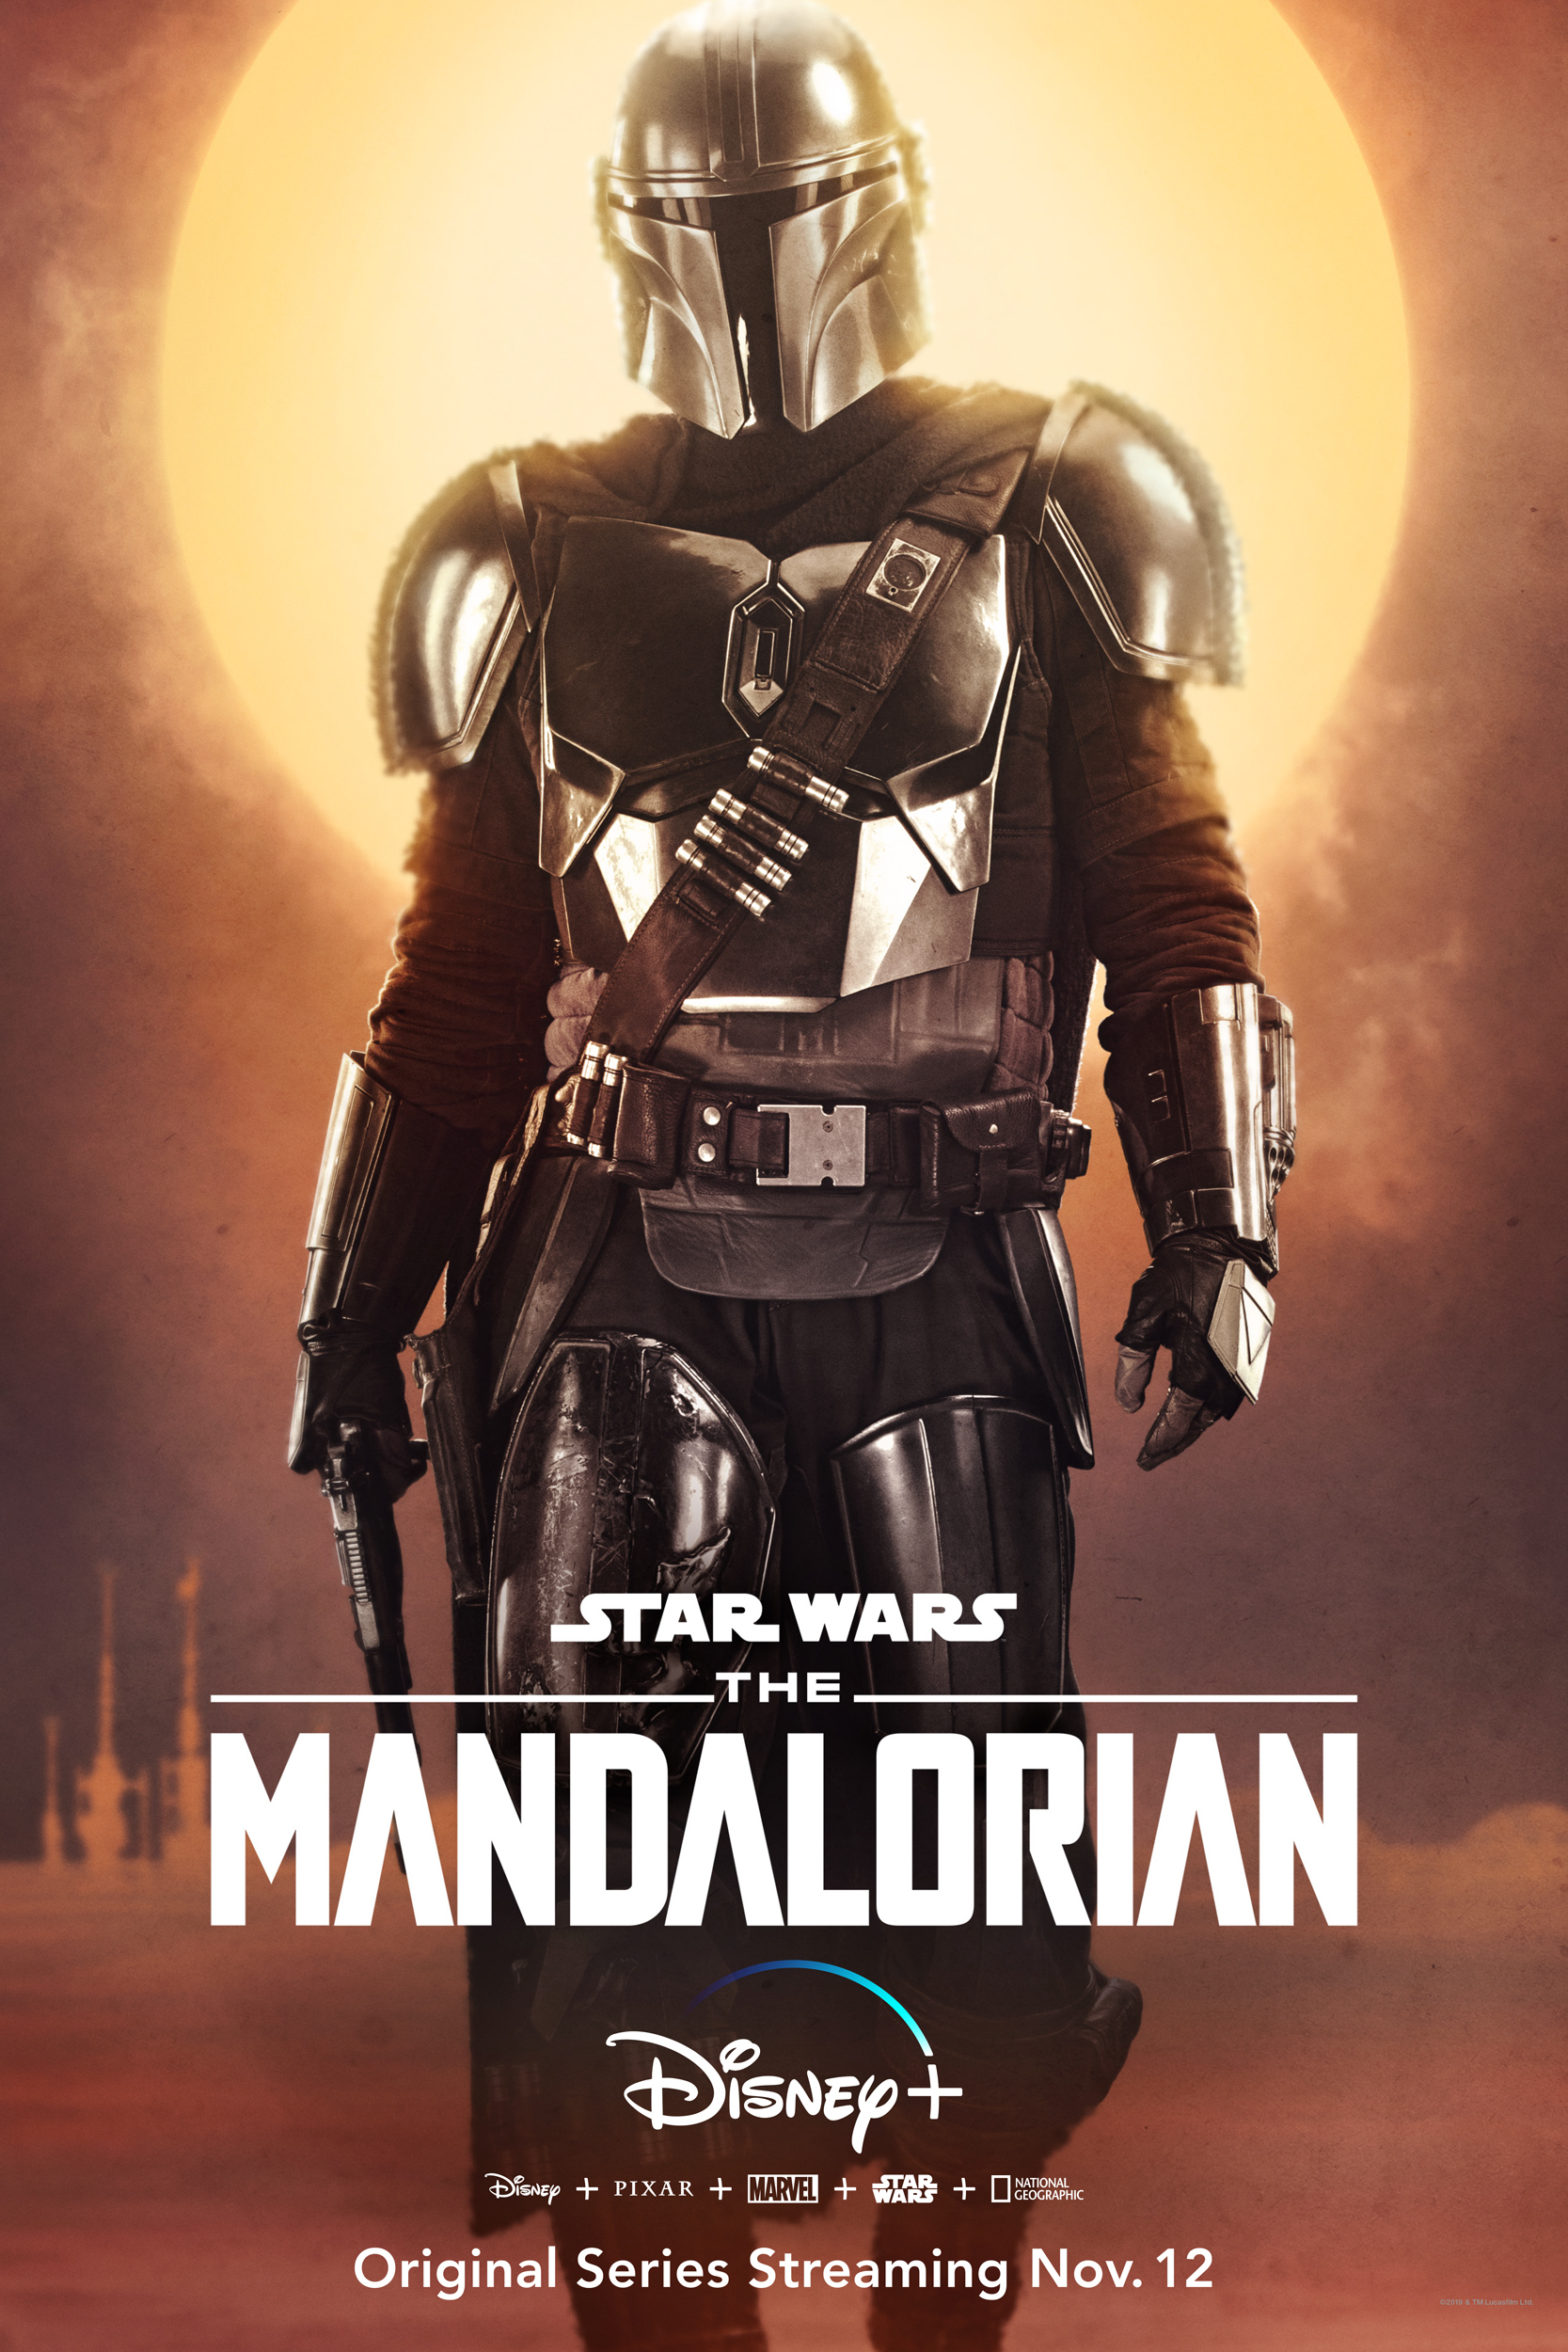 The Mandalorian Chapter 20: The Foundling (TV Episode 2023) - IMDb